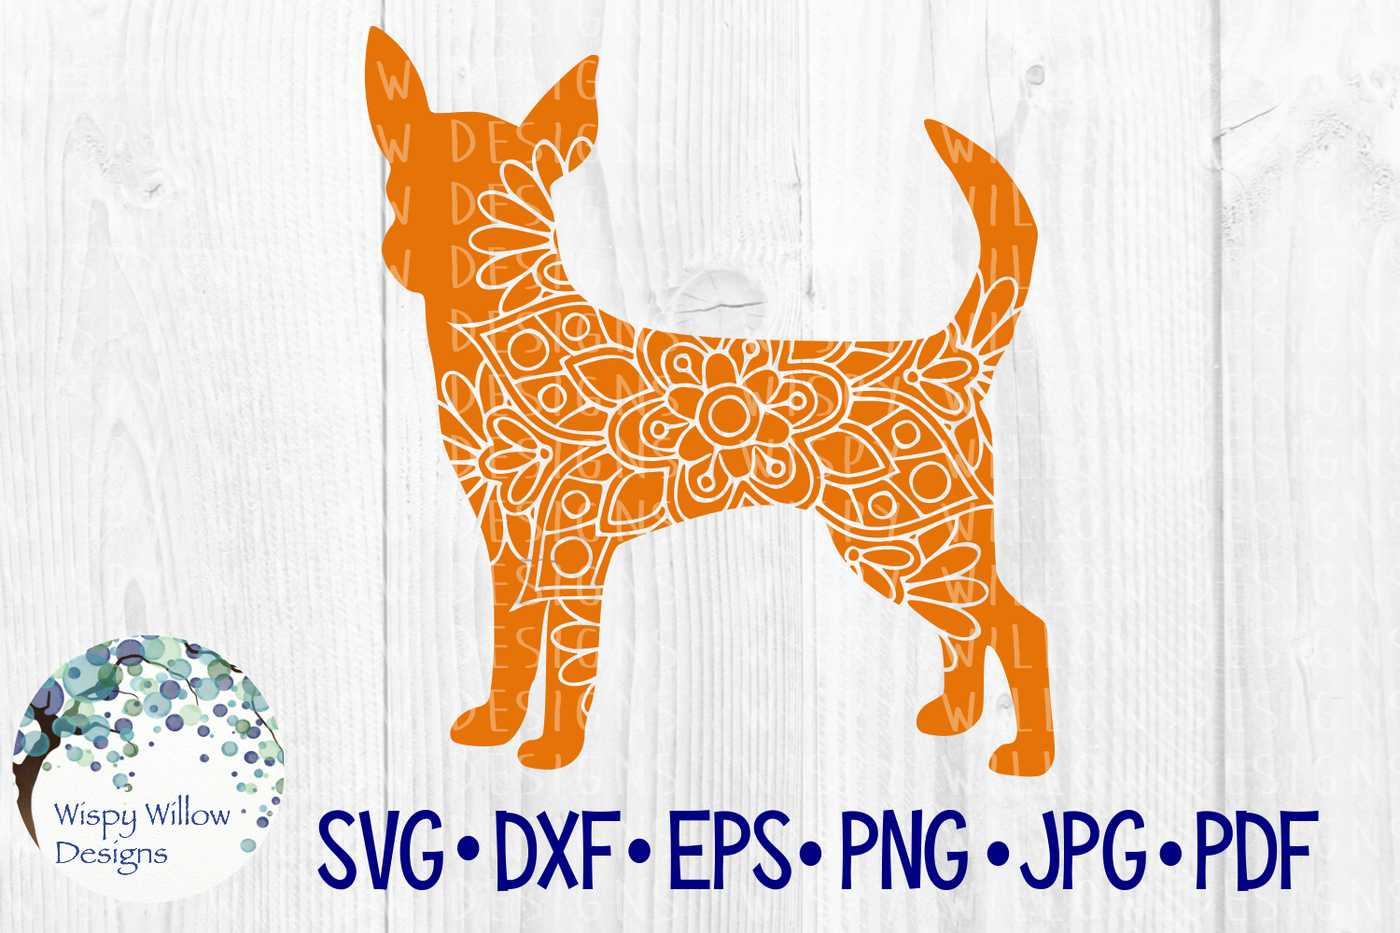 Chihuahua Dog Animal Mandala Svg Dxf Eps Png Jpg Pdf By Wispy Willow Designs Thehungryjpeg Com